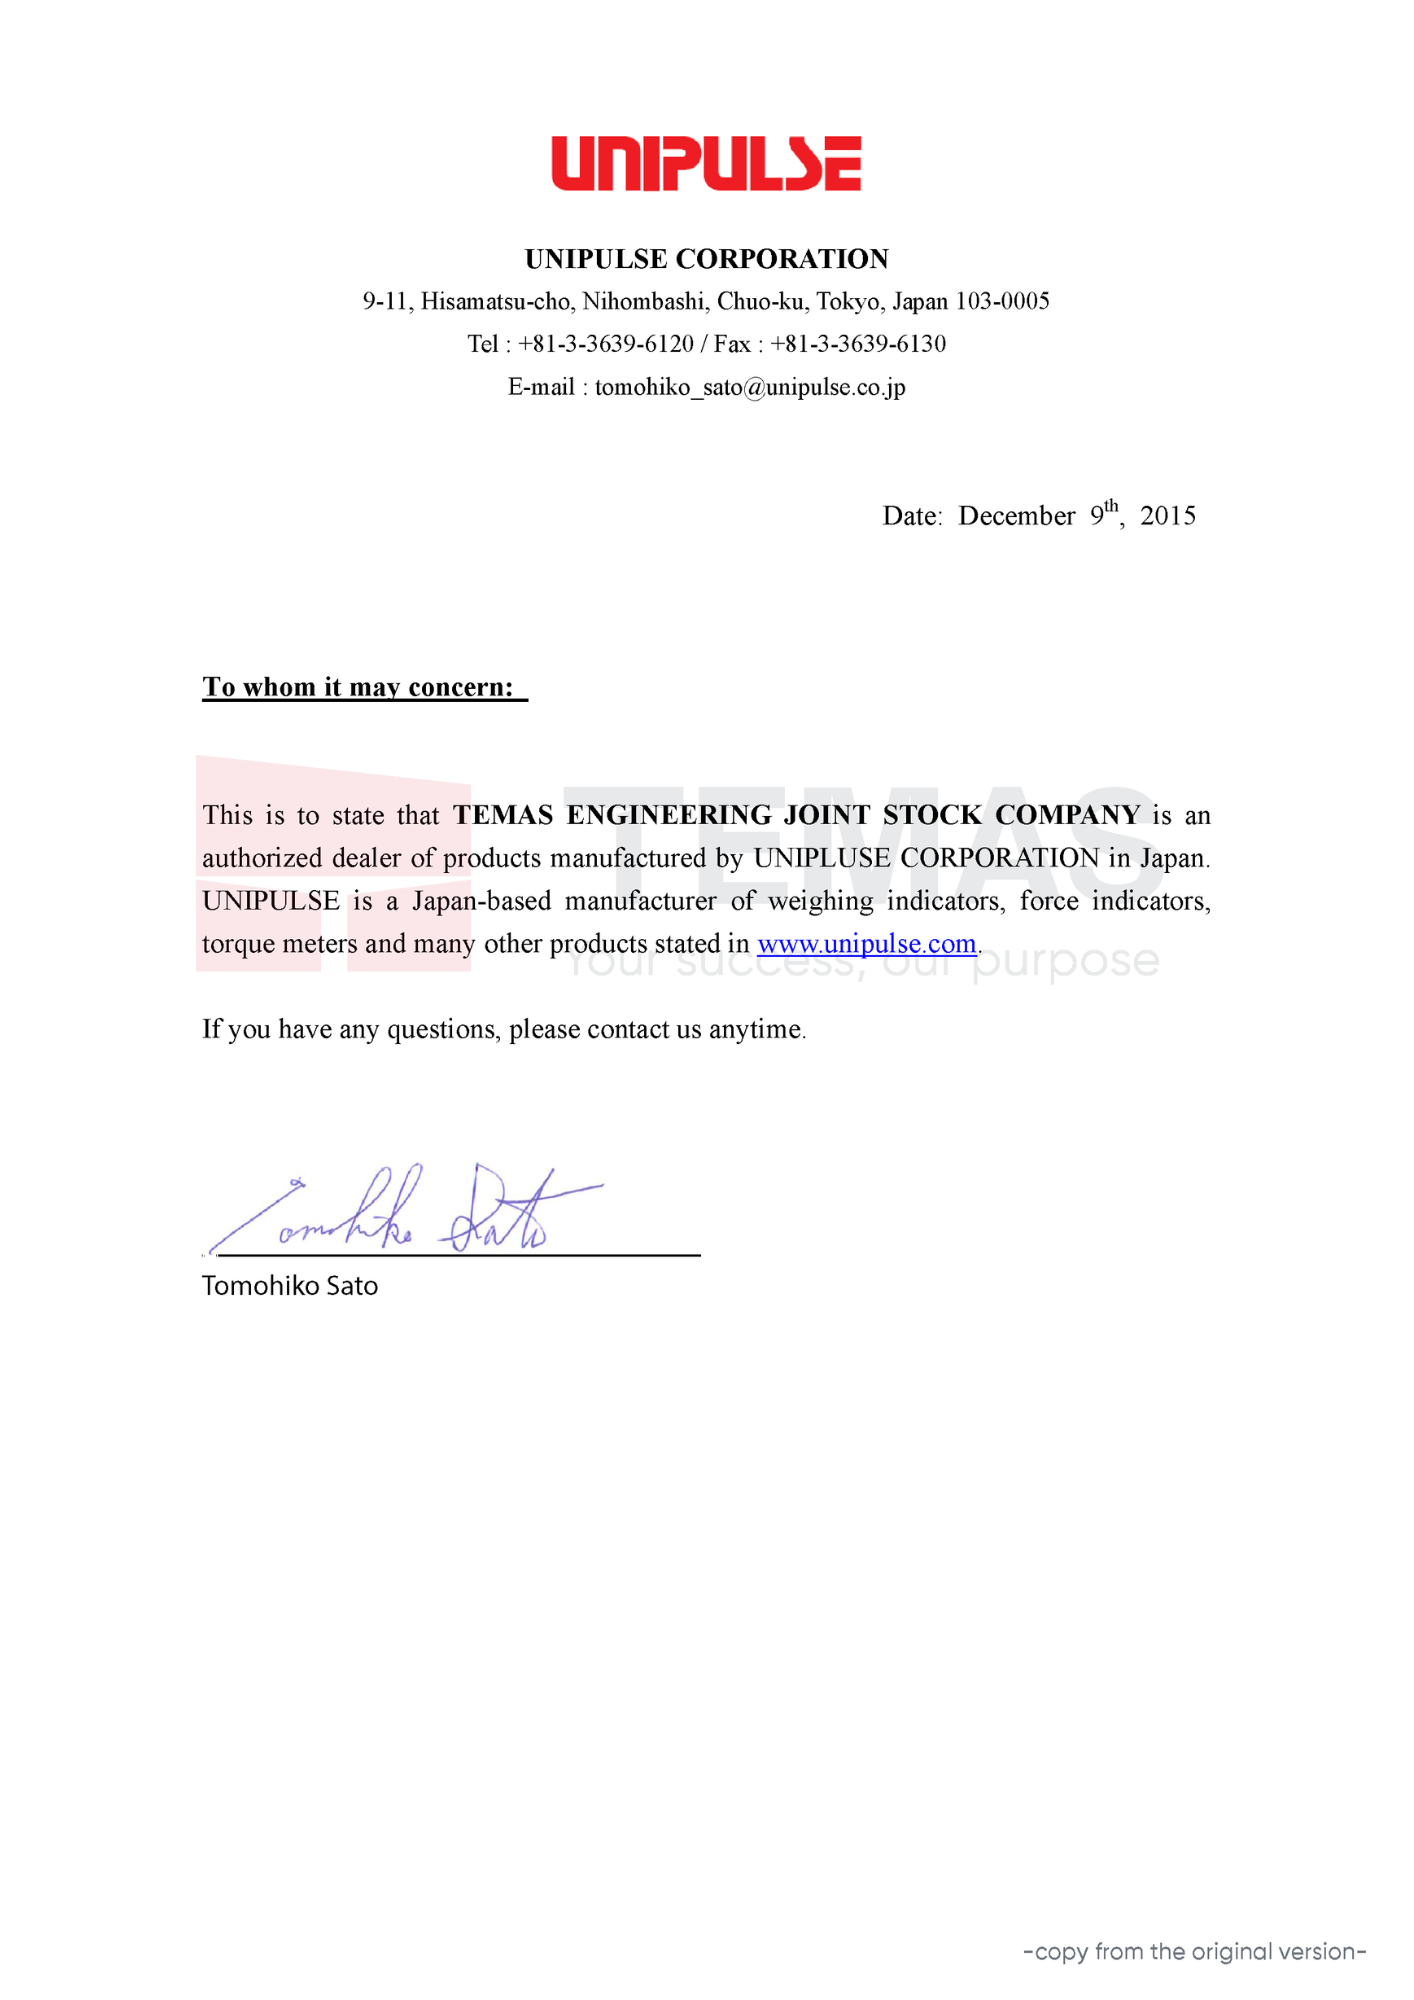 Unipulse [/br] Certificate of Authorized Dealer